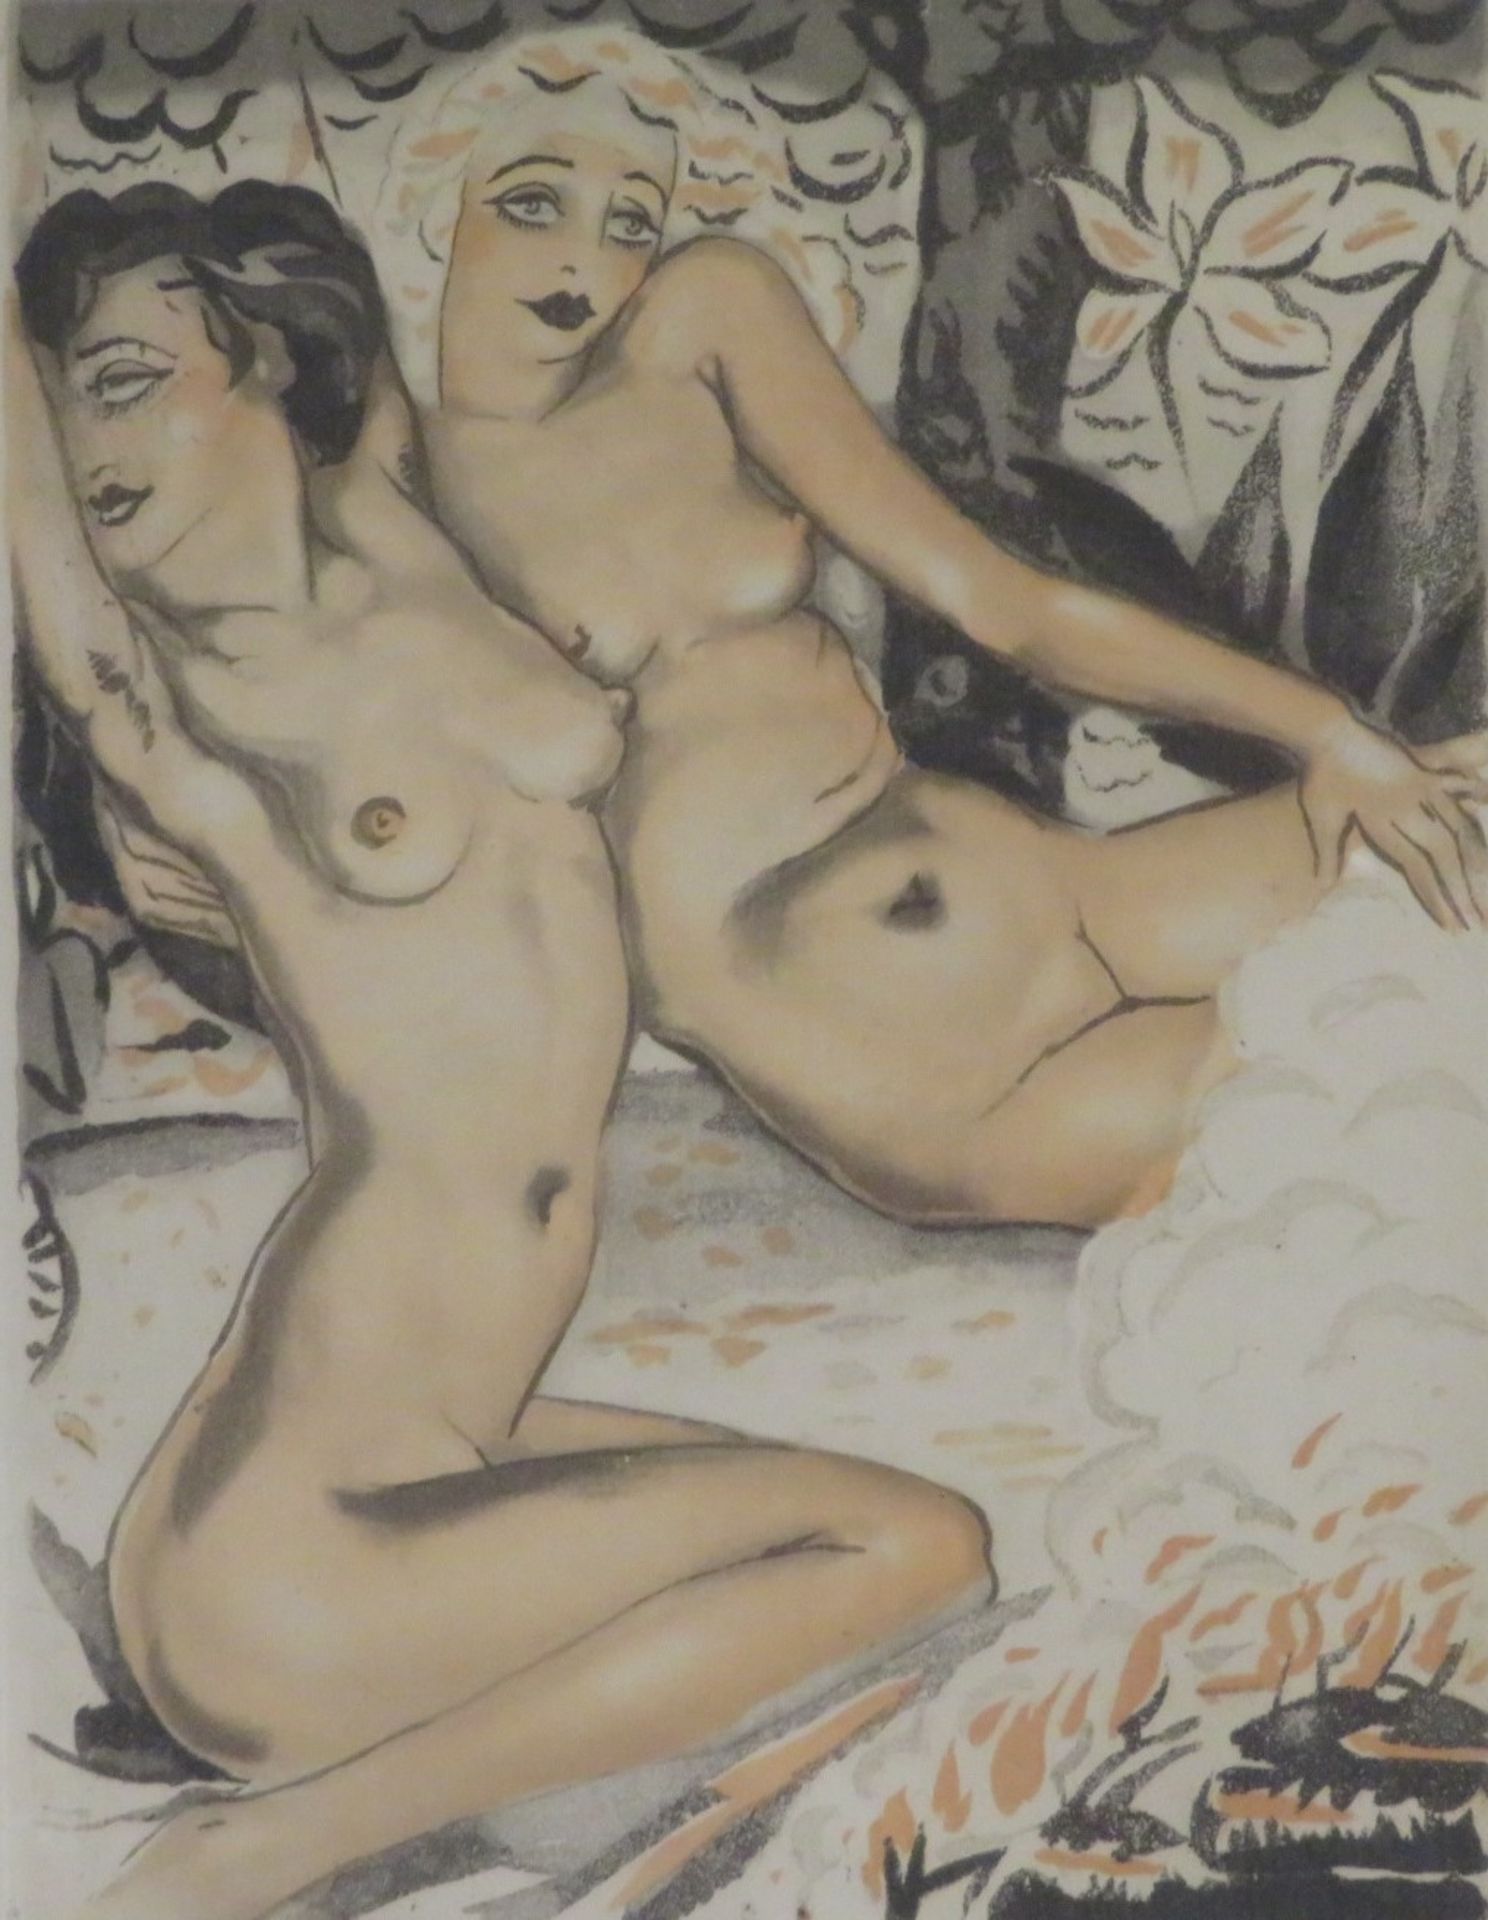 Greuell, Arthur, 1891 - 1966, Wildbad, Belgischer Künstler,